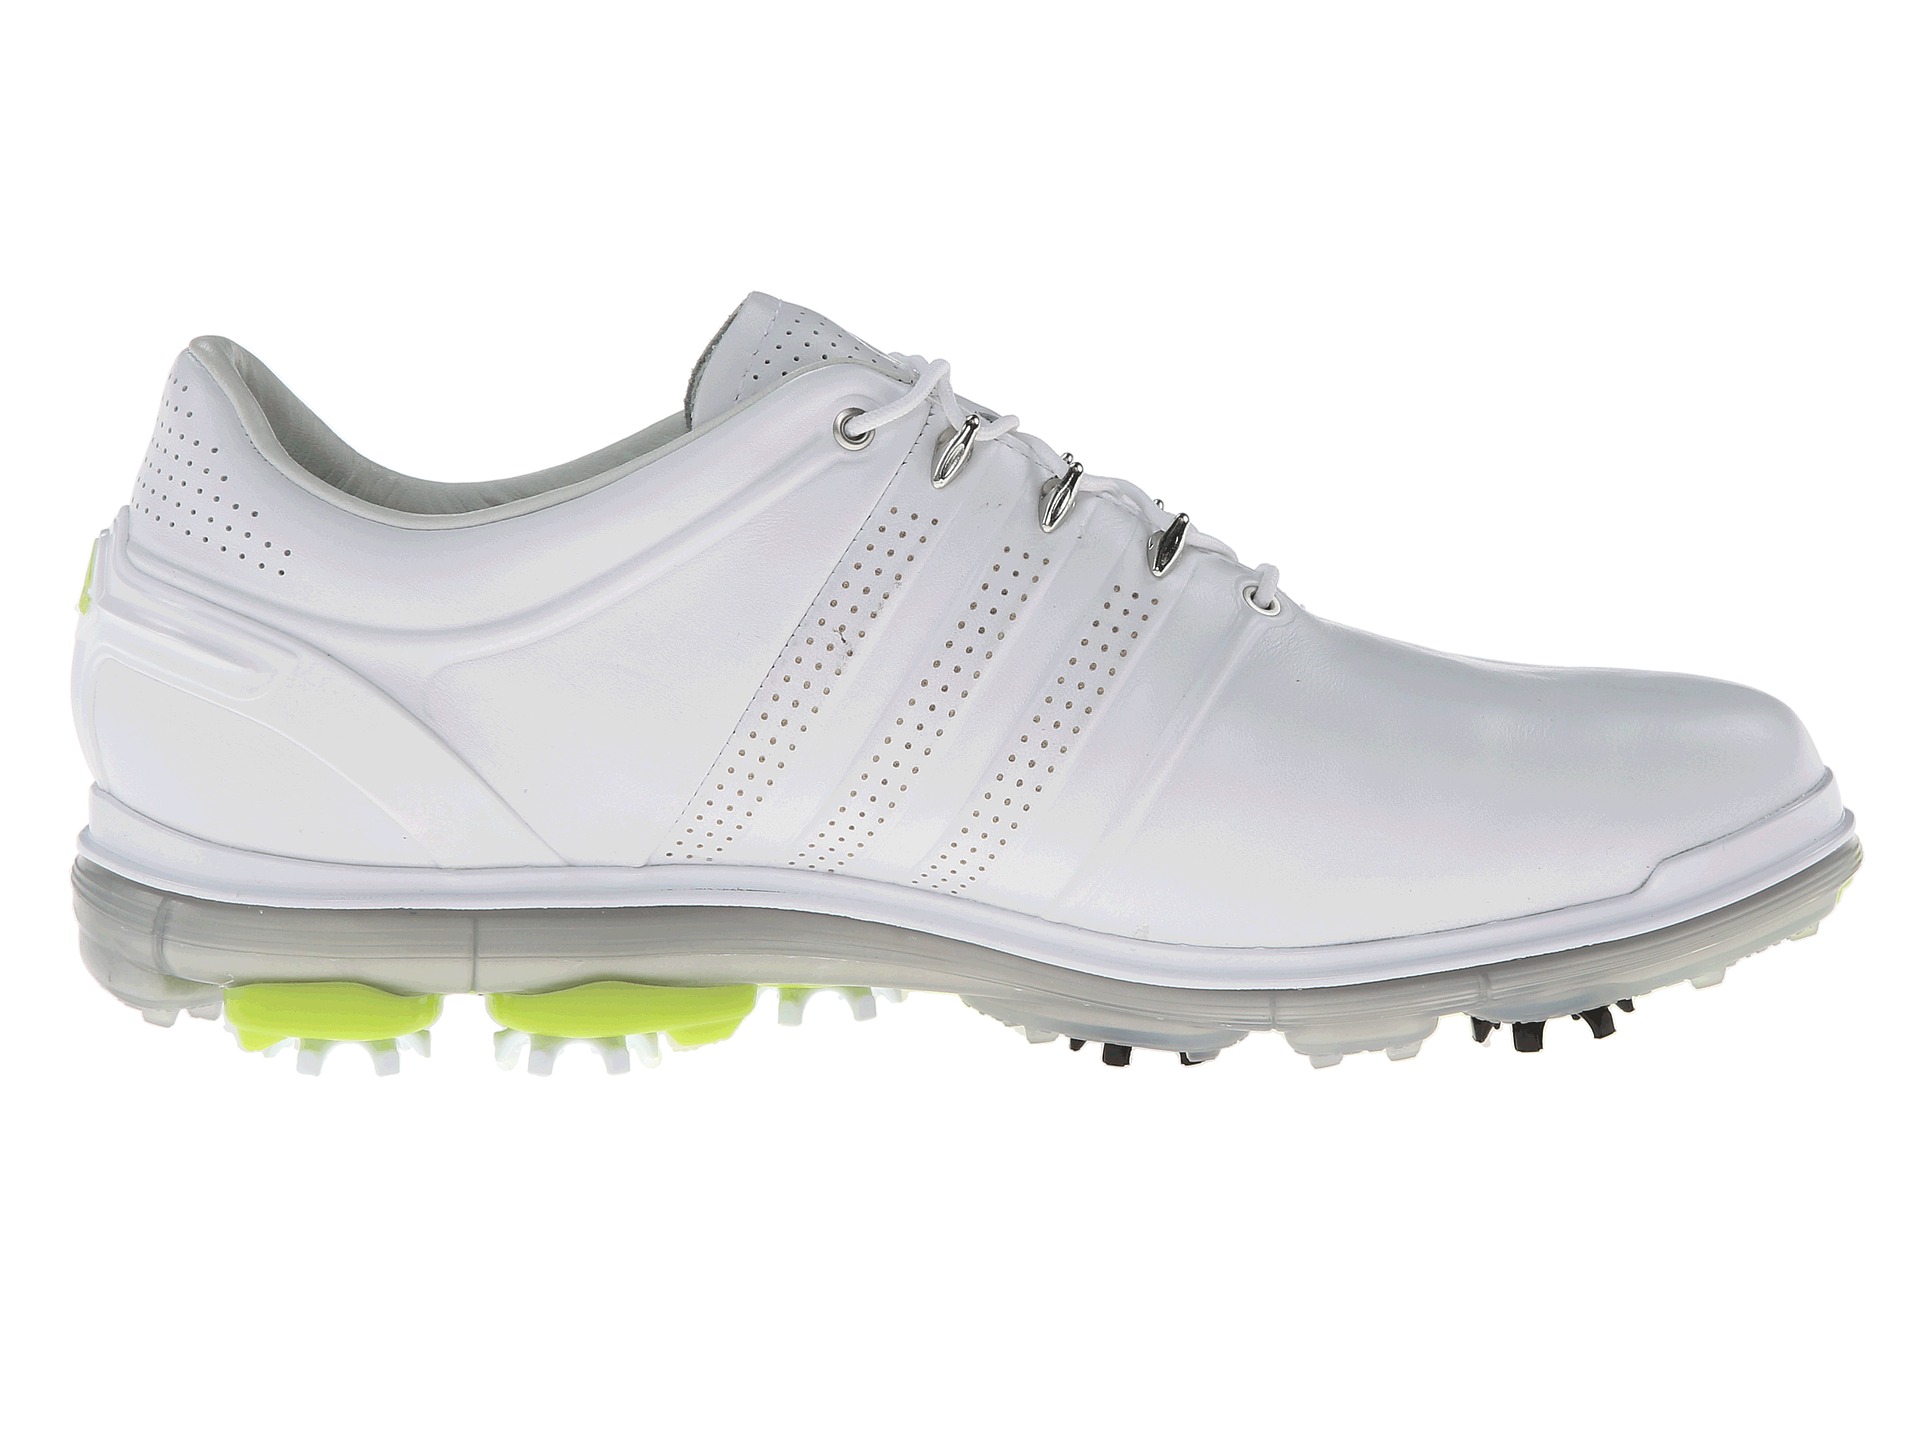 adidas Golf pure 360 Running White/Metallic Silver/Slime